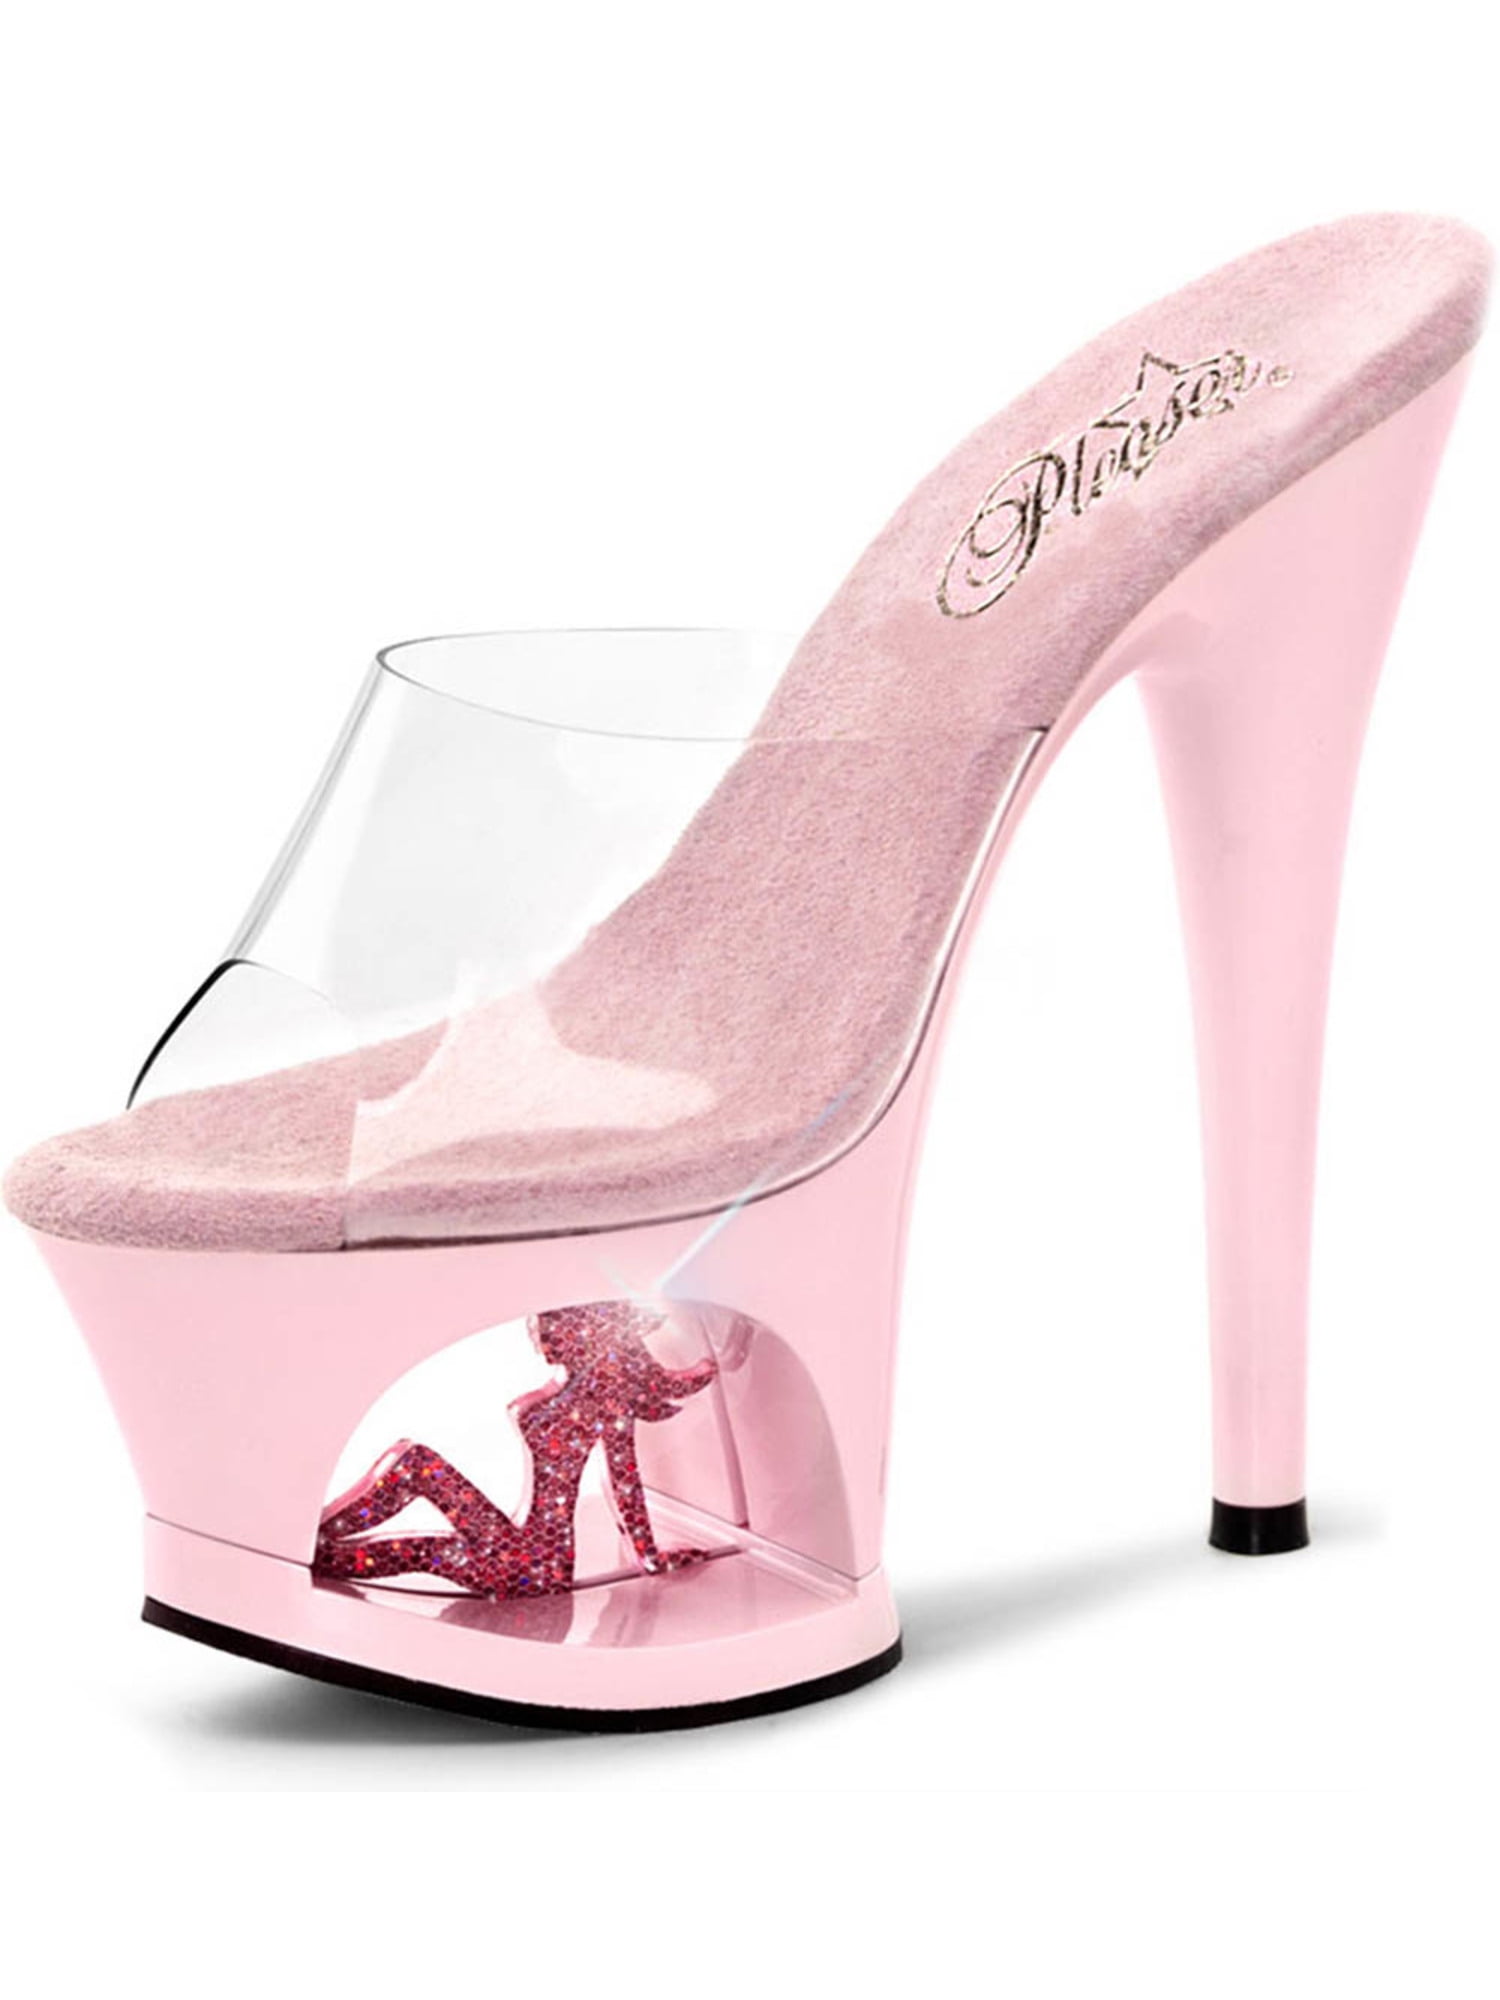 pale pink heeled sandals